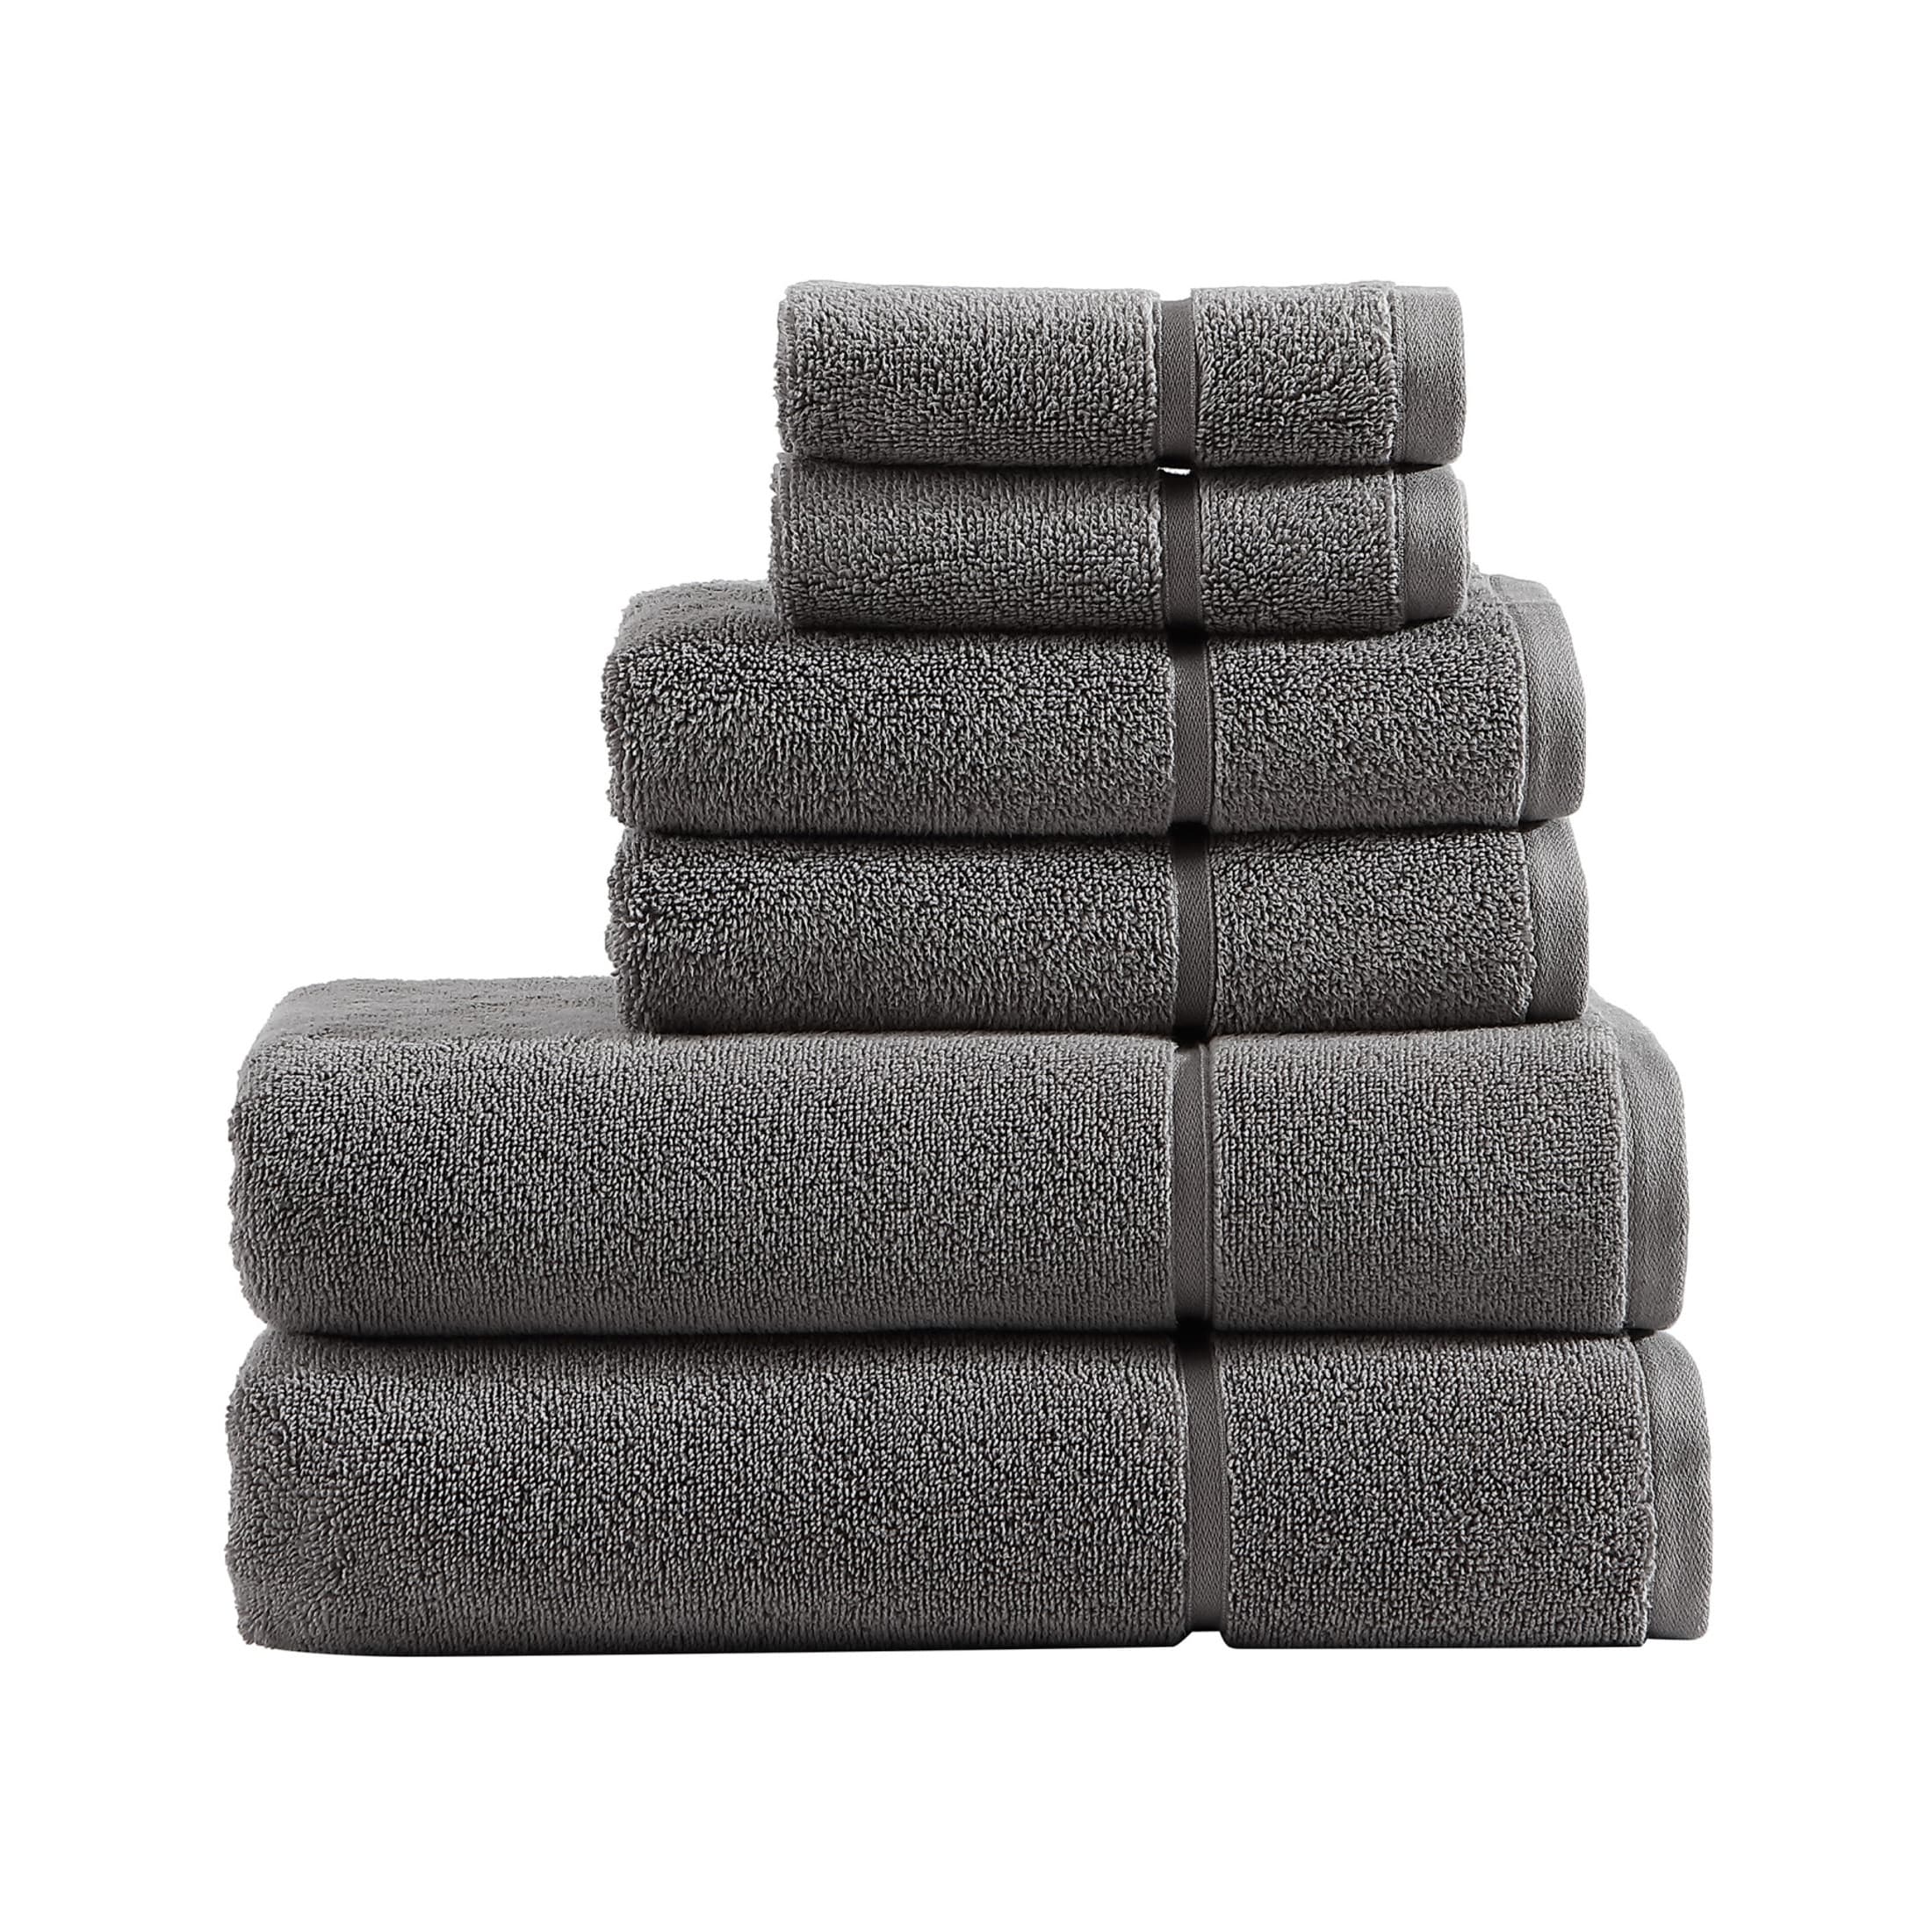 https://ak1.ostkcdn.com/images/products/is/images/direct/54552c52891f5ce7f69aef7dd4f3a11e3ab1676e/Vera-Wang-Modern-Lux-Cotton-6-Piece-Towel-Set.jpg